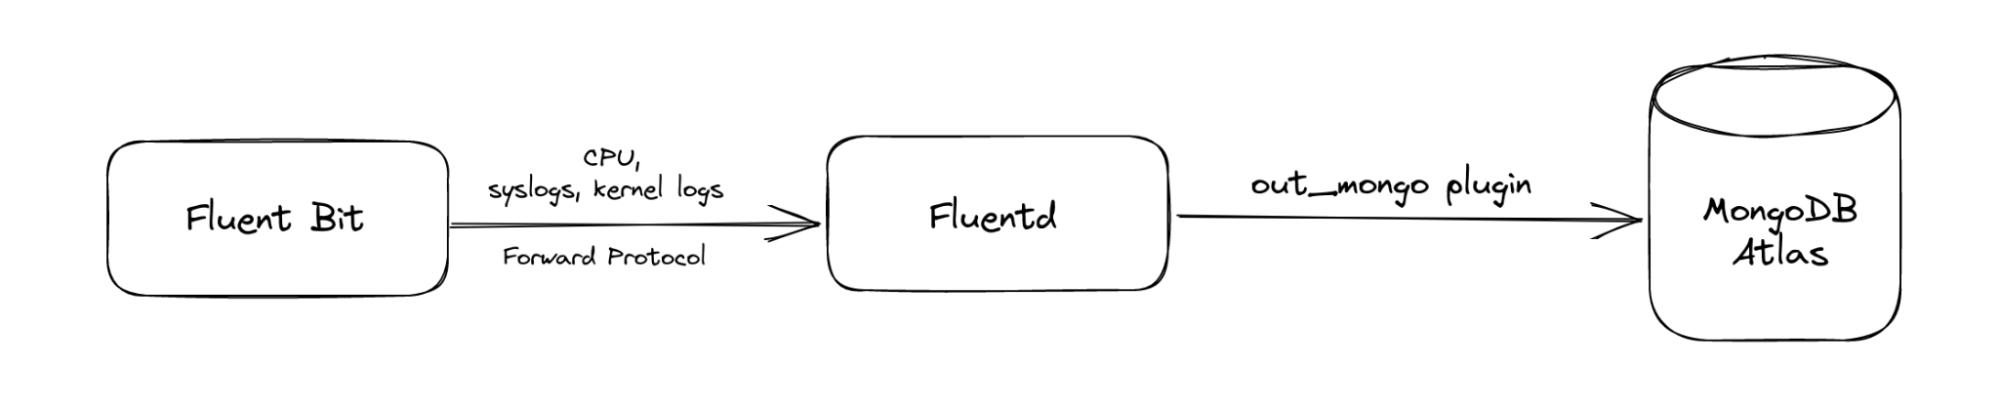 Data Pipeline showing Fluent Bit to Fluentd to MongoDB